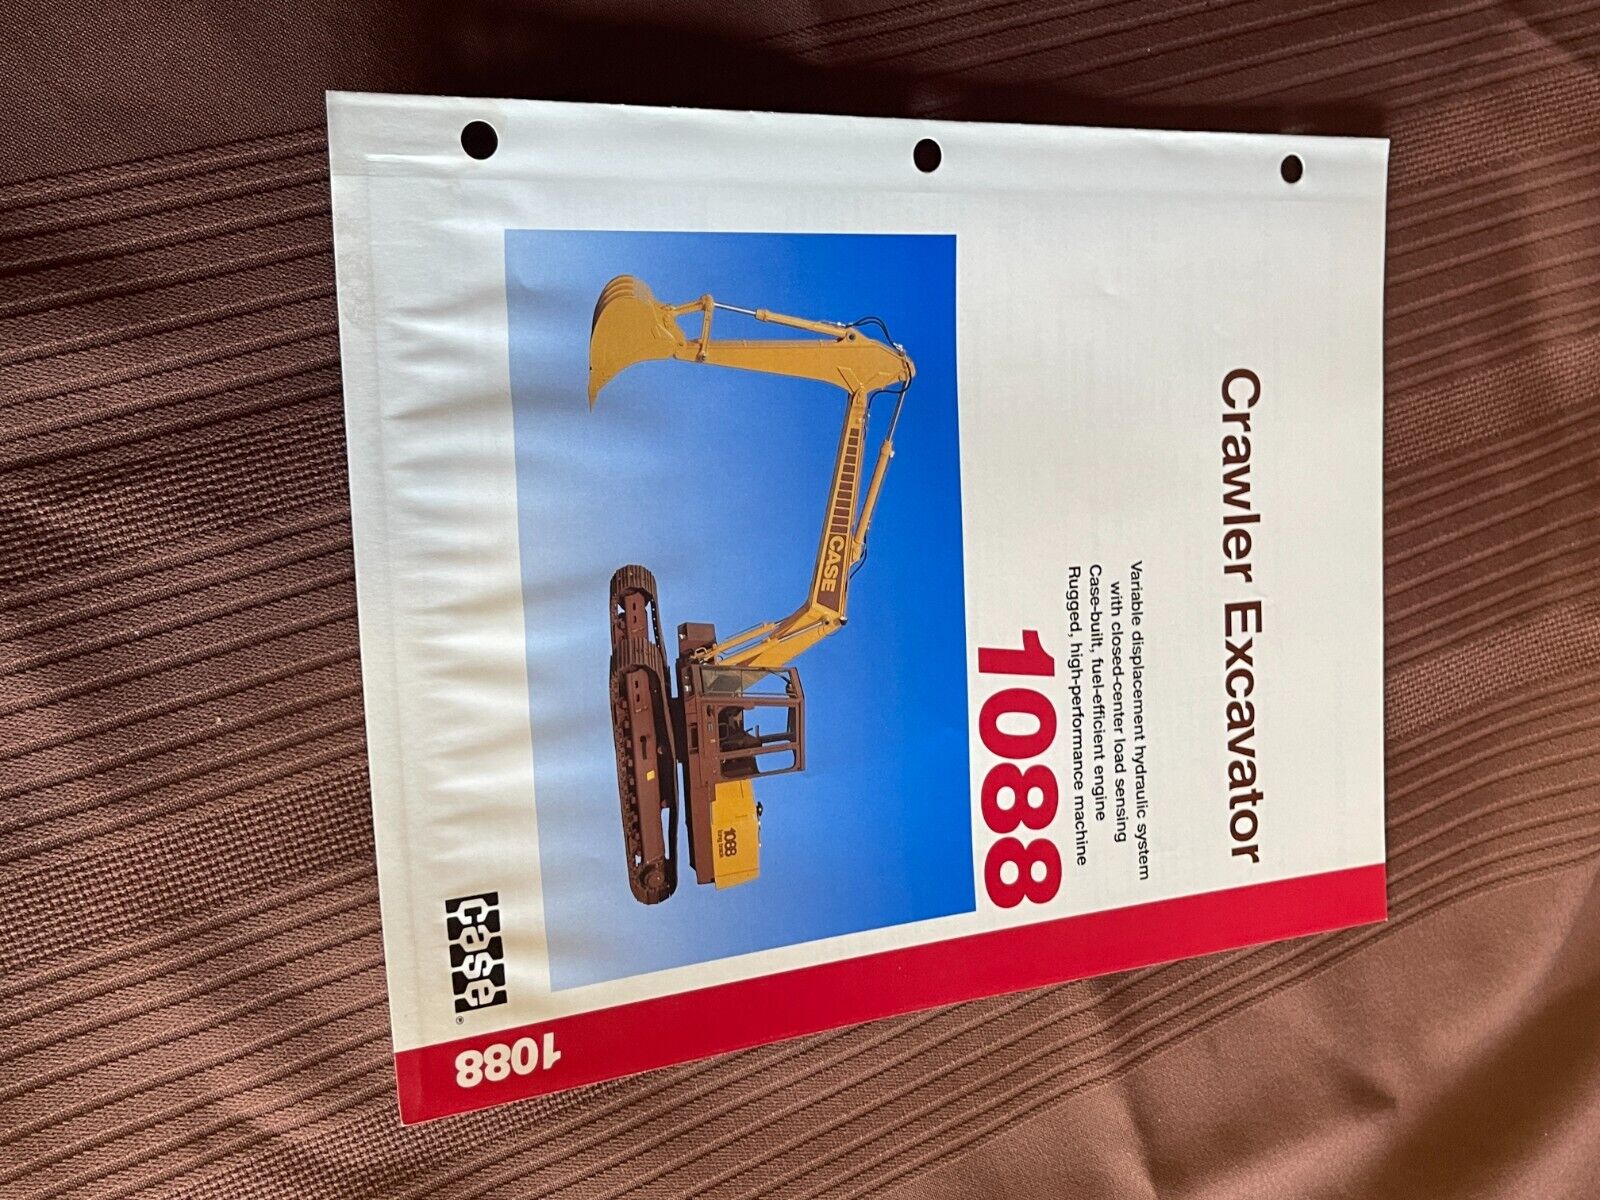 Case Crawler Excavator 1088 Manufacturing Sales Specification Brochure